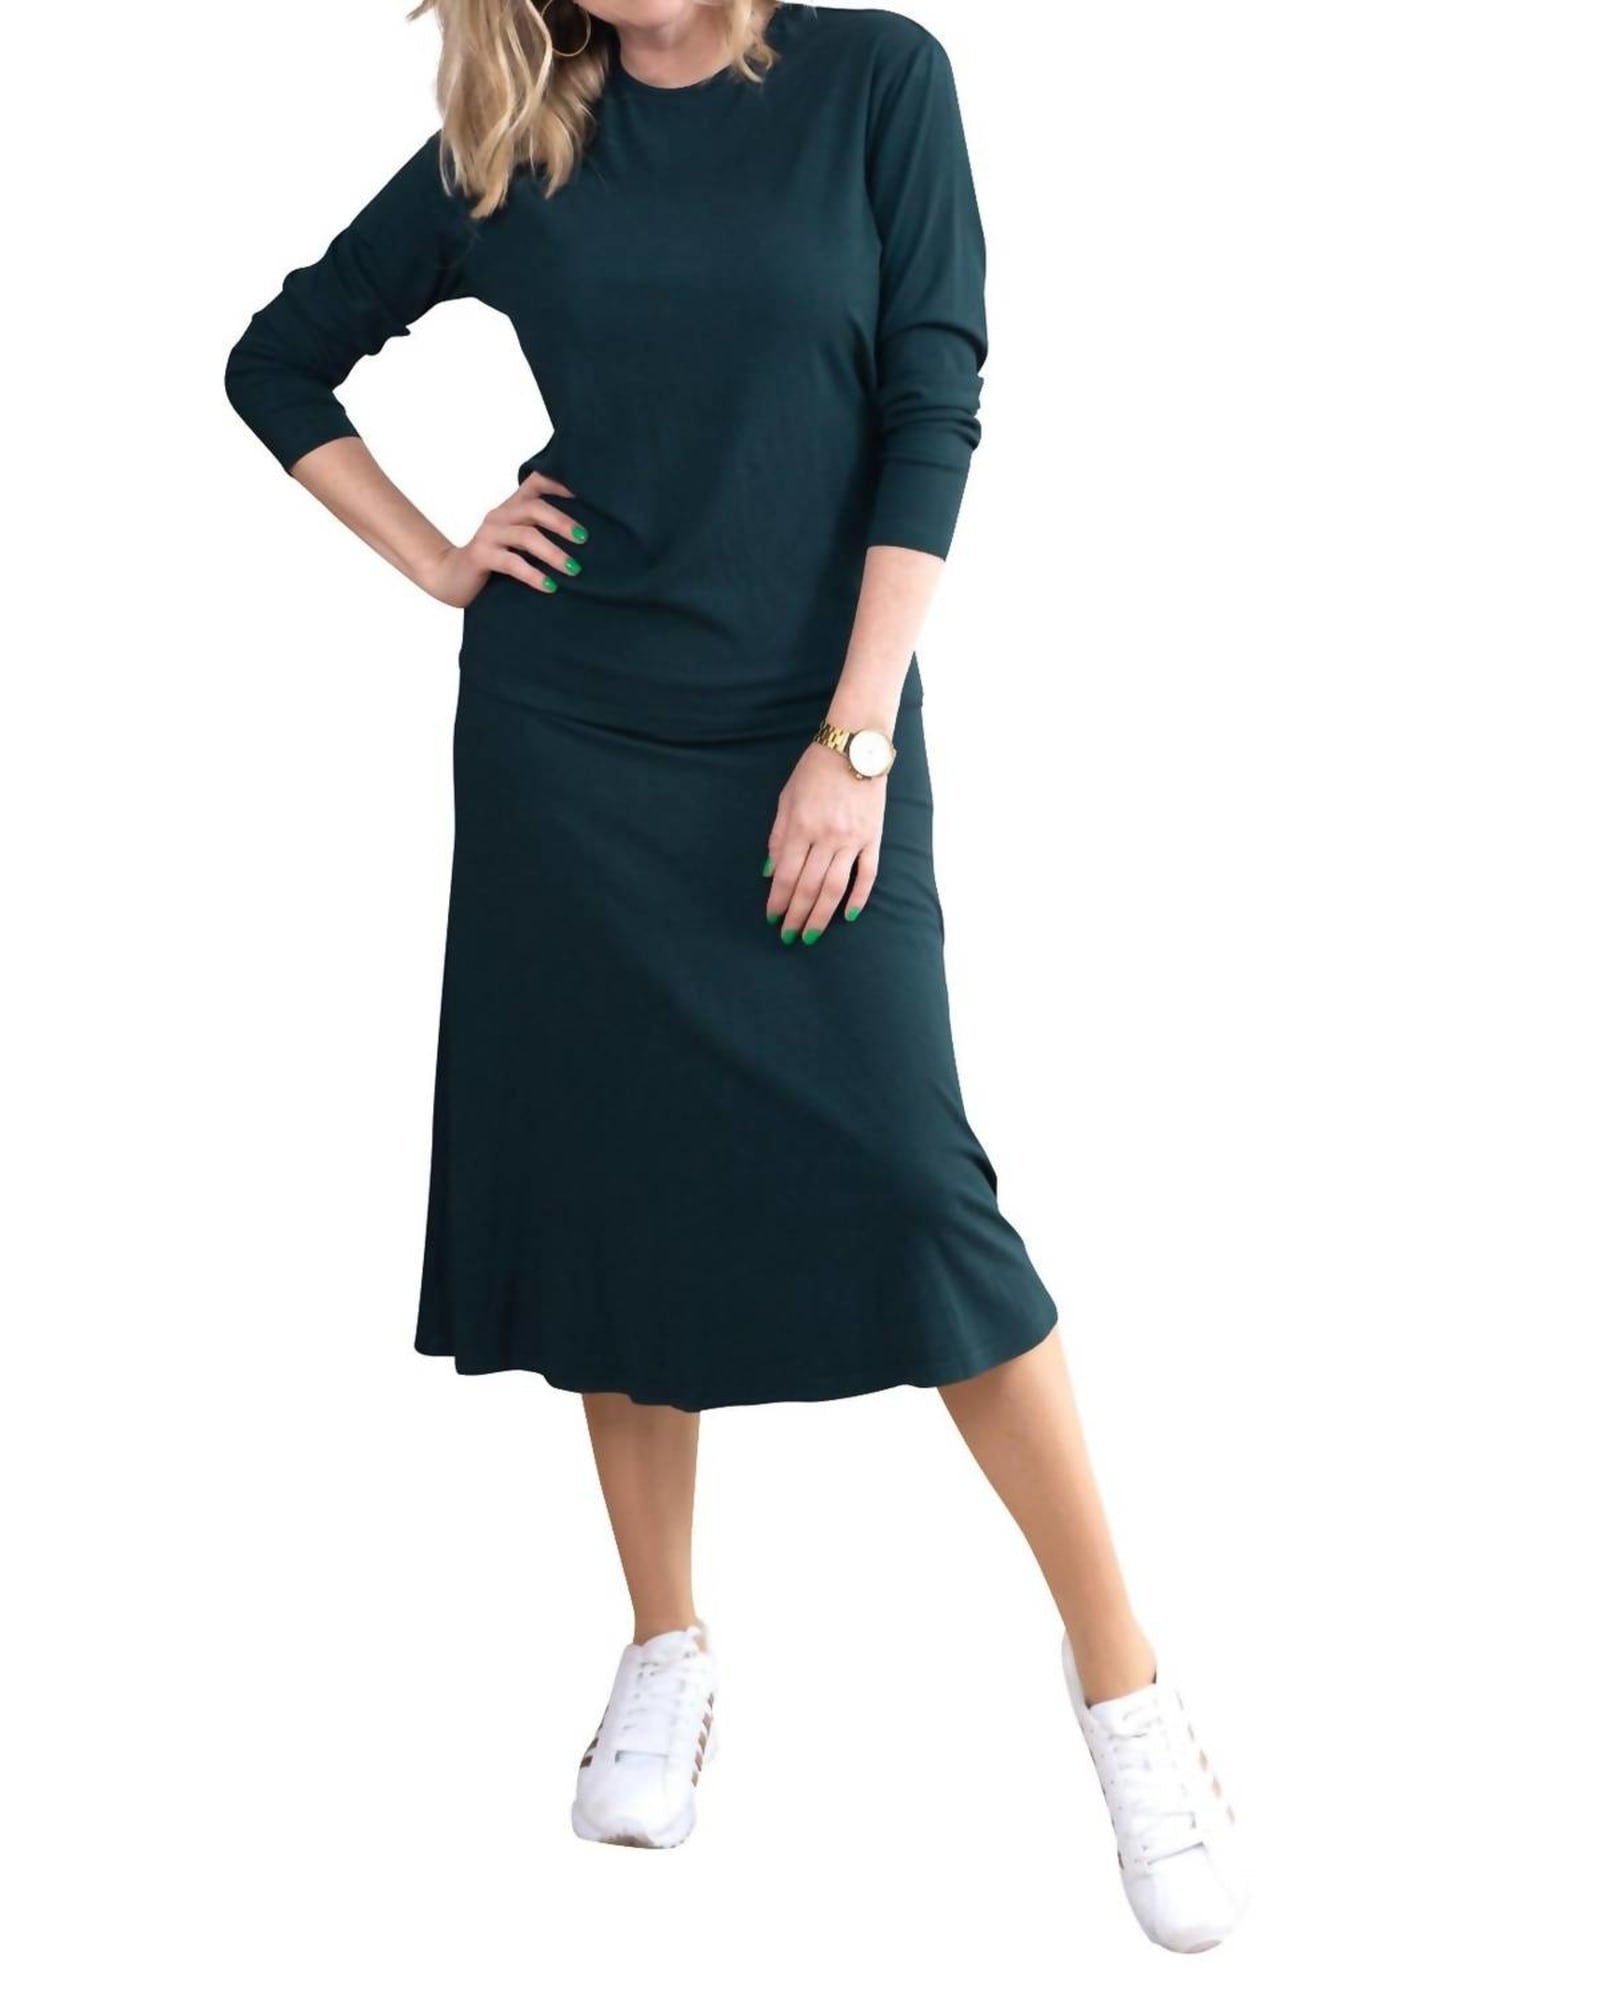 Ribbed A-Line Skirt In Jade | Jade